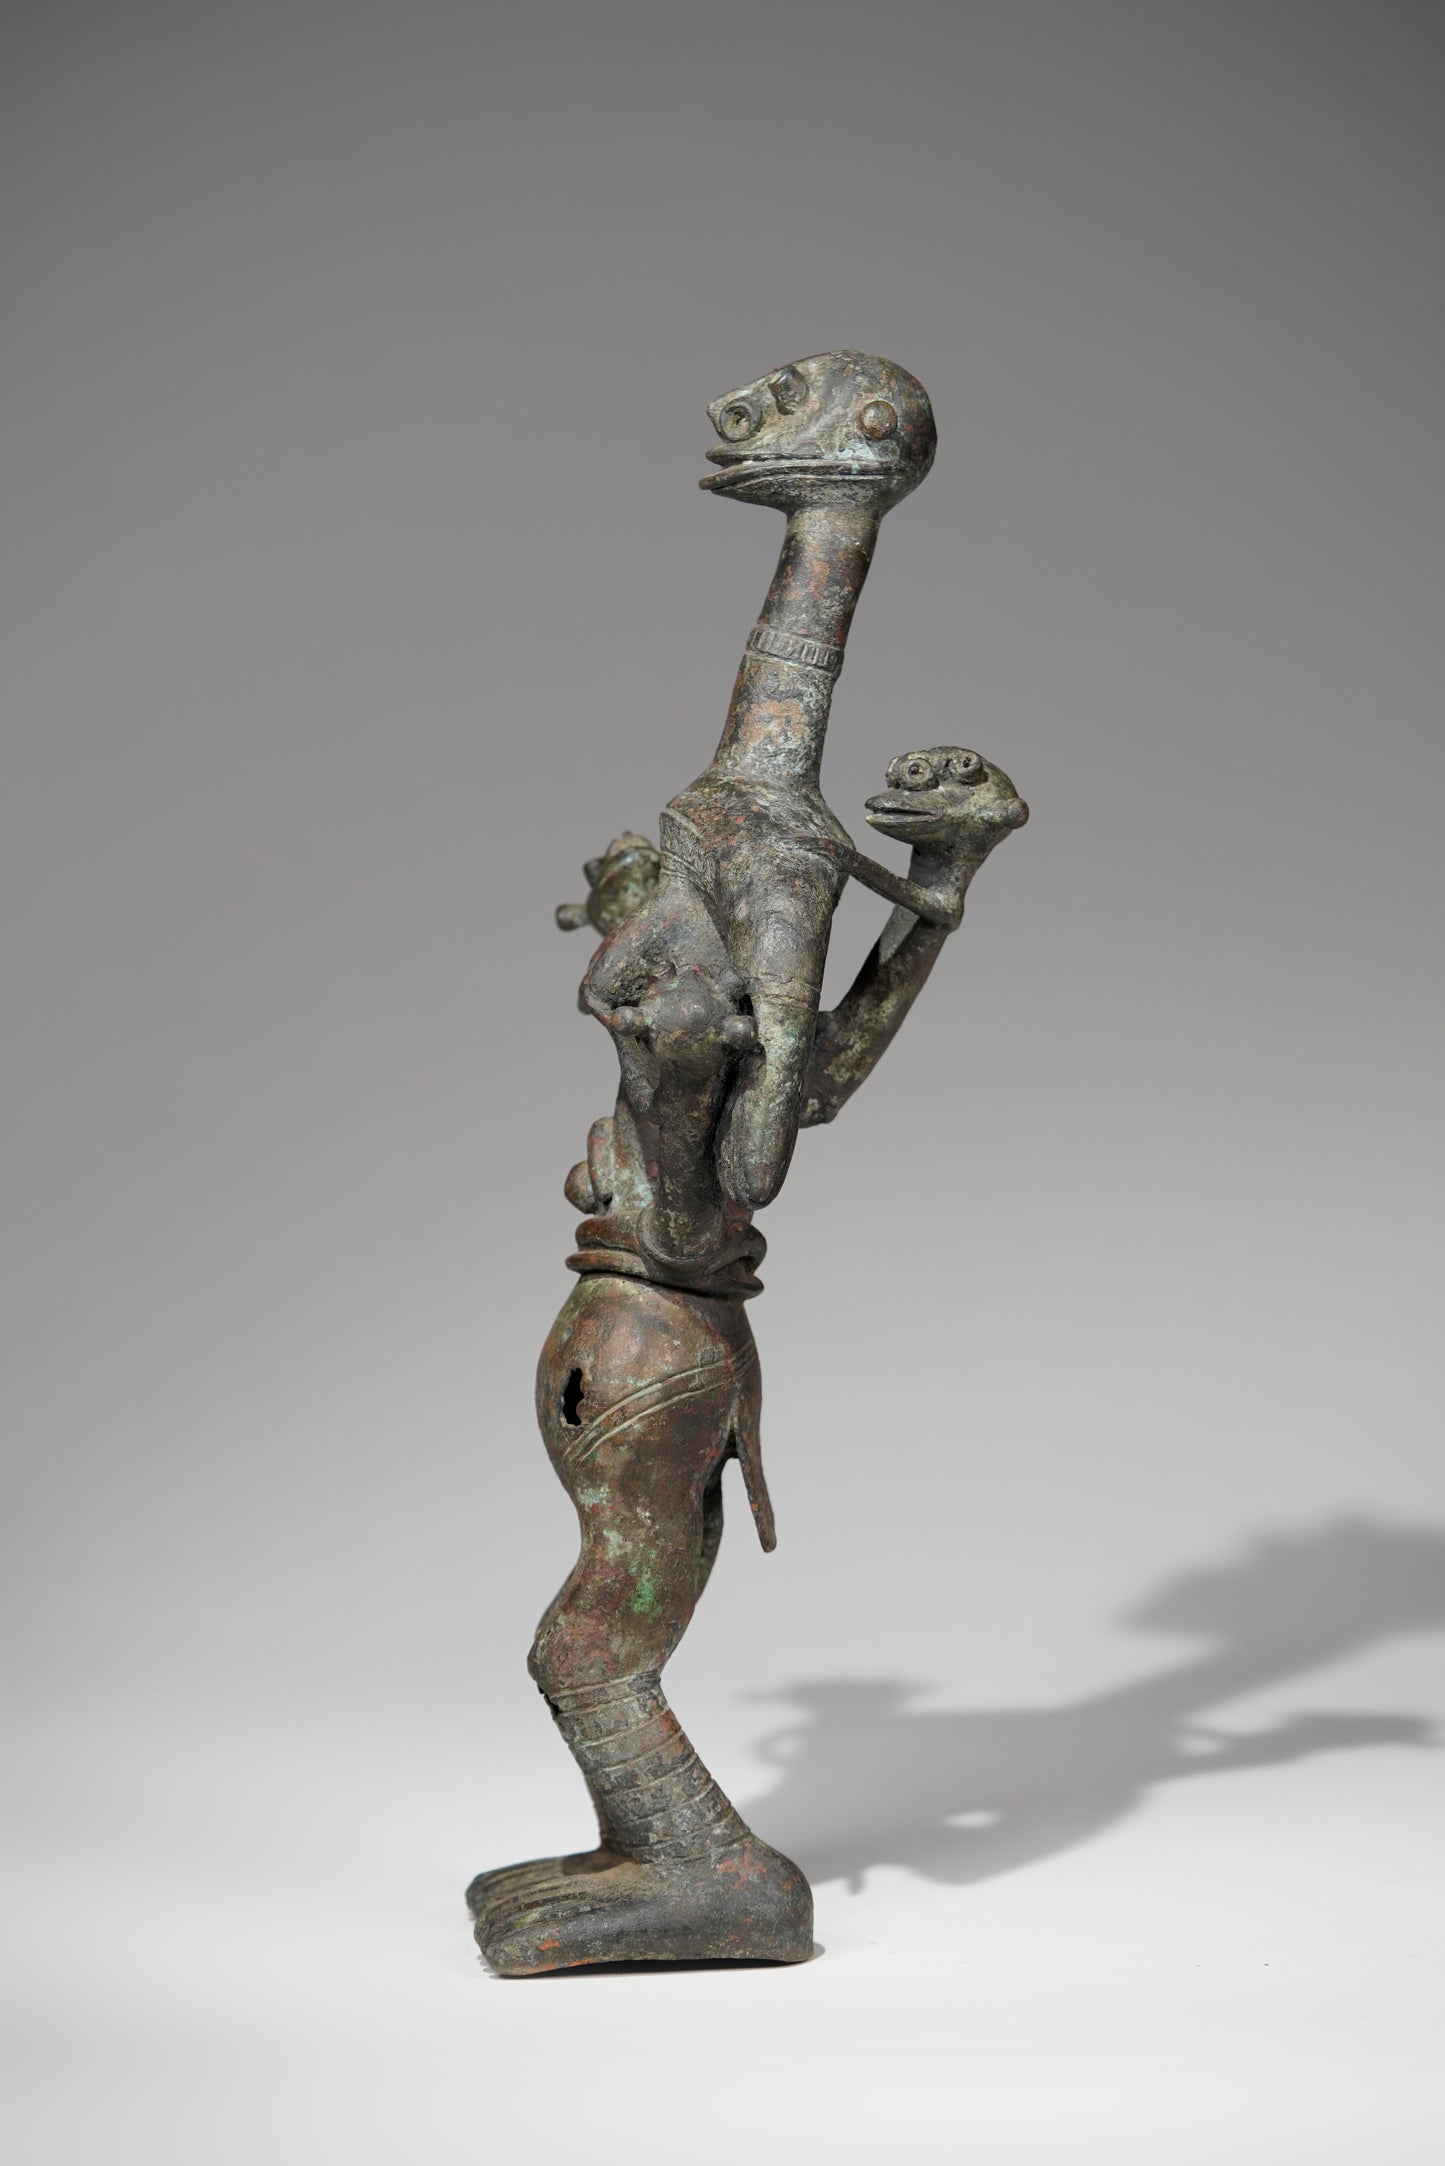 A female Tikar sculpture